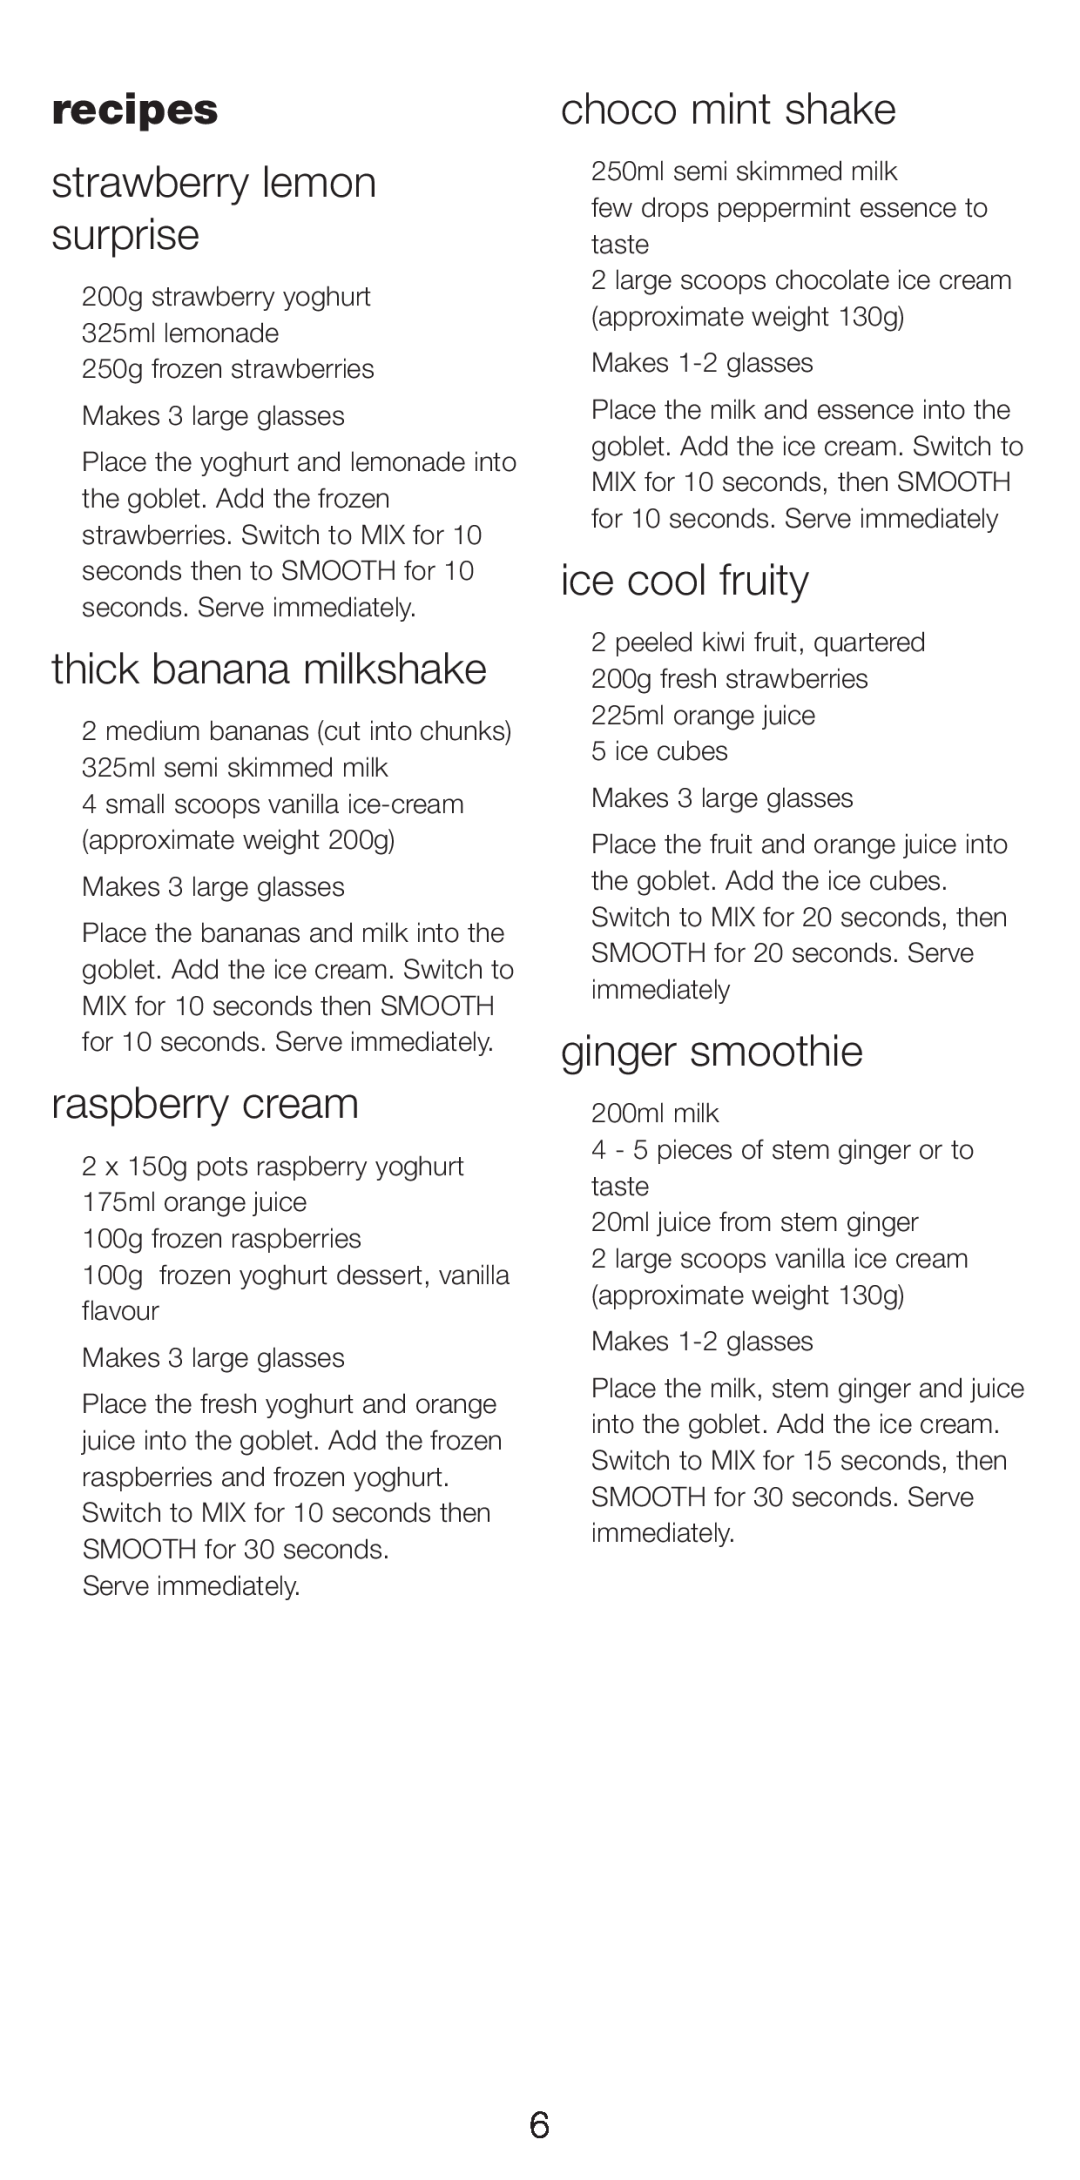 Kenwood SB240 manual recipes, strawberry lemon surprise, thick banana milkshake, raspberry cream, choco mint shake 